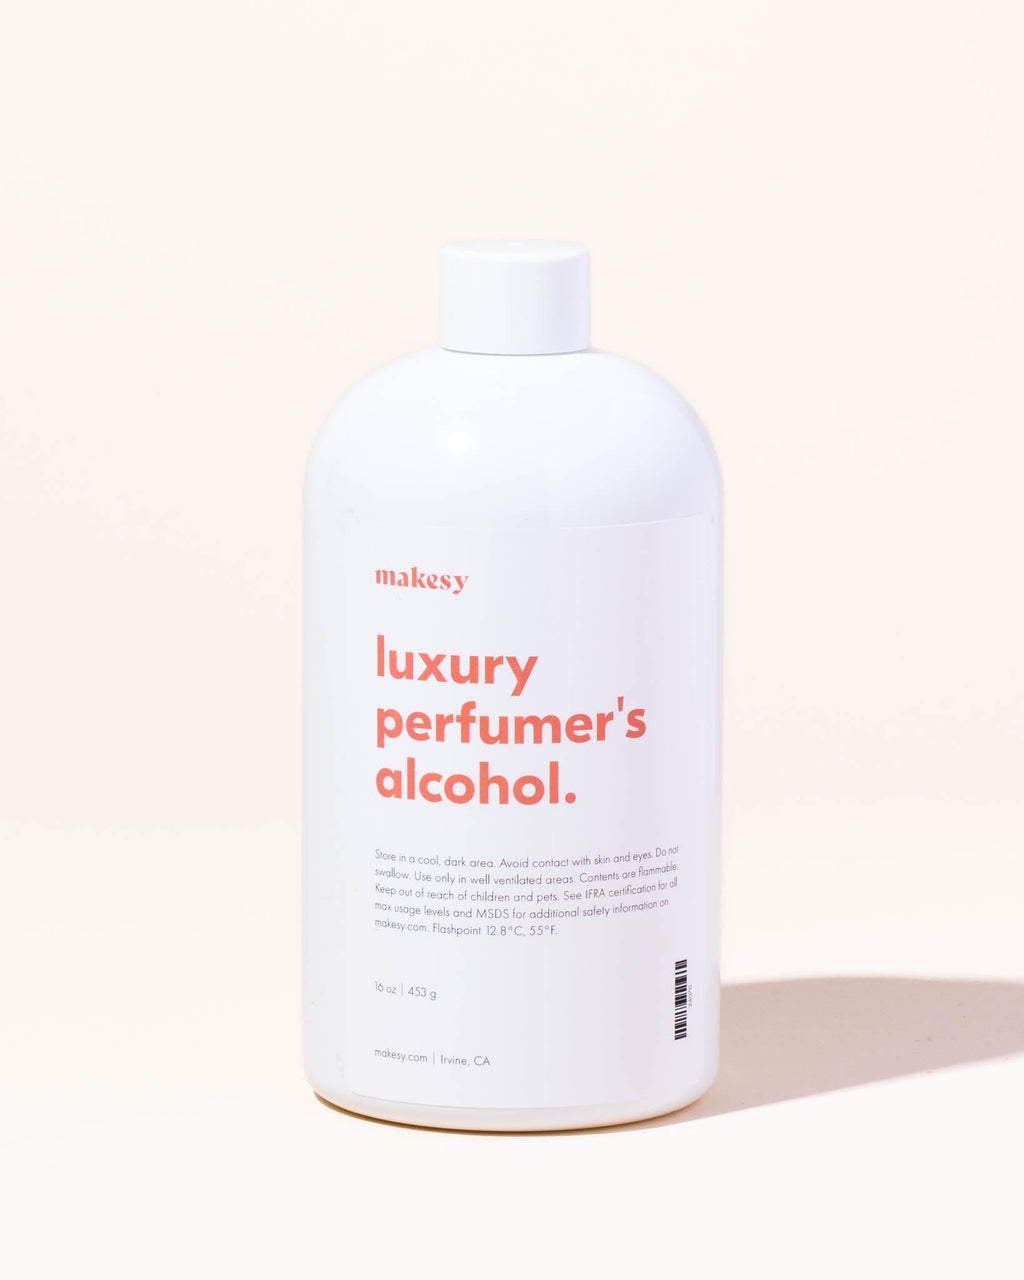 ALCOHOL, PERFUMER'S GRAIN ALCOHOL – Creating Perfume